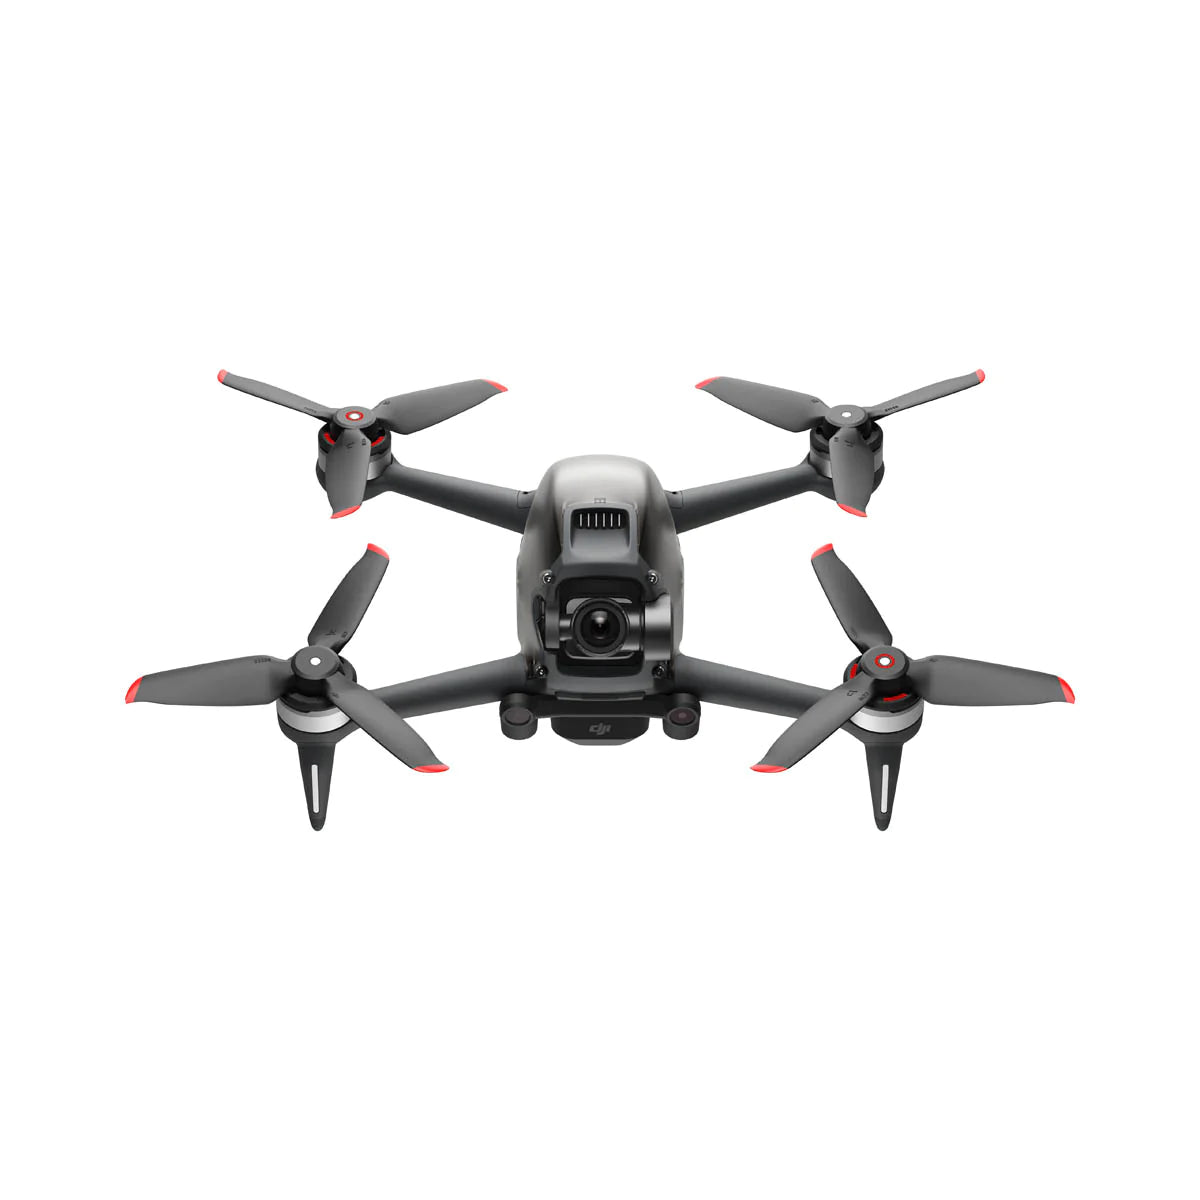 DJI FPV EXPLORER COMBO FIRST-PERSON VIEW DRONE UAV QUADCOPTER 4K